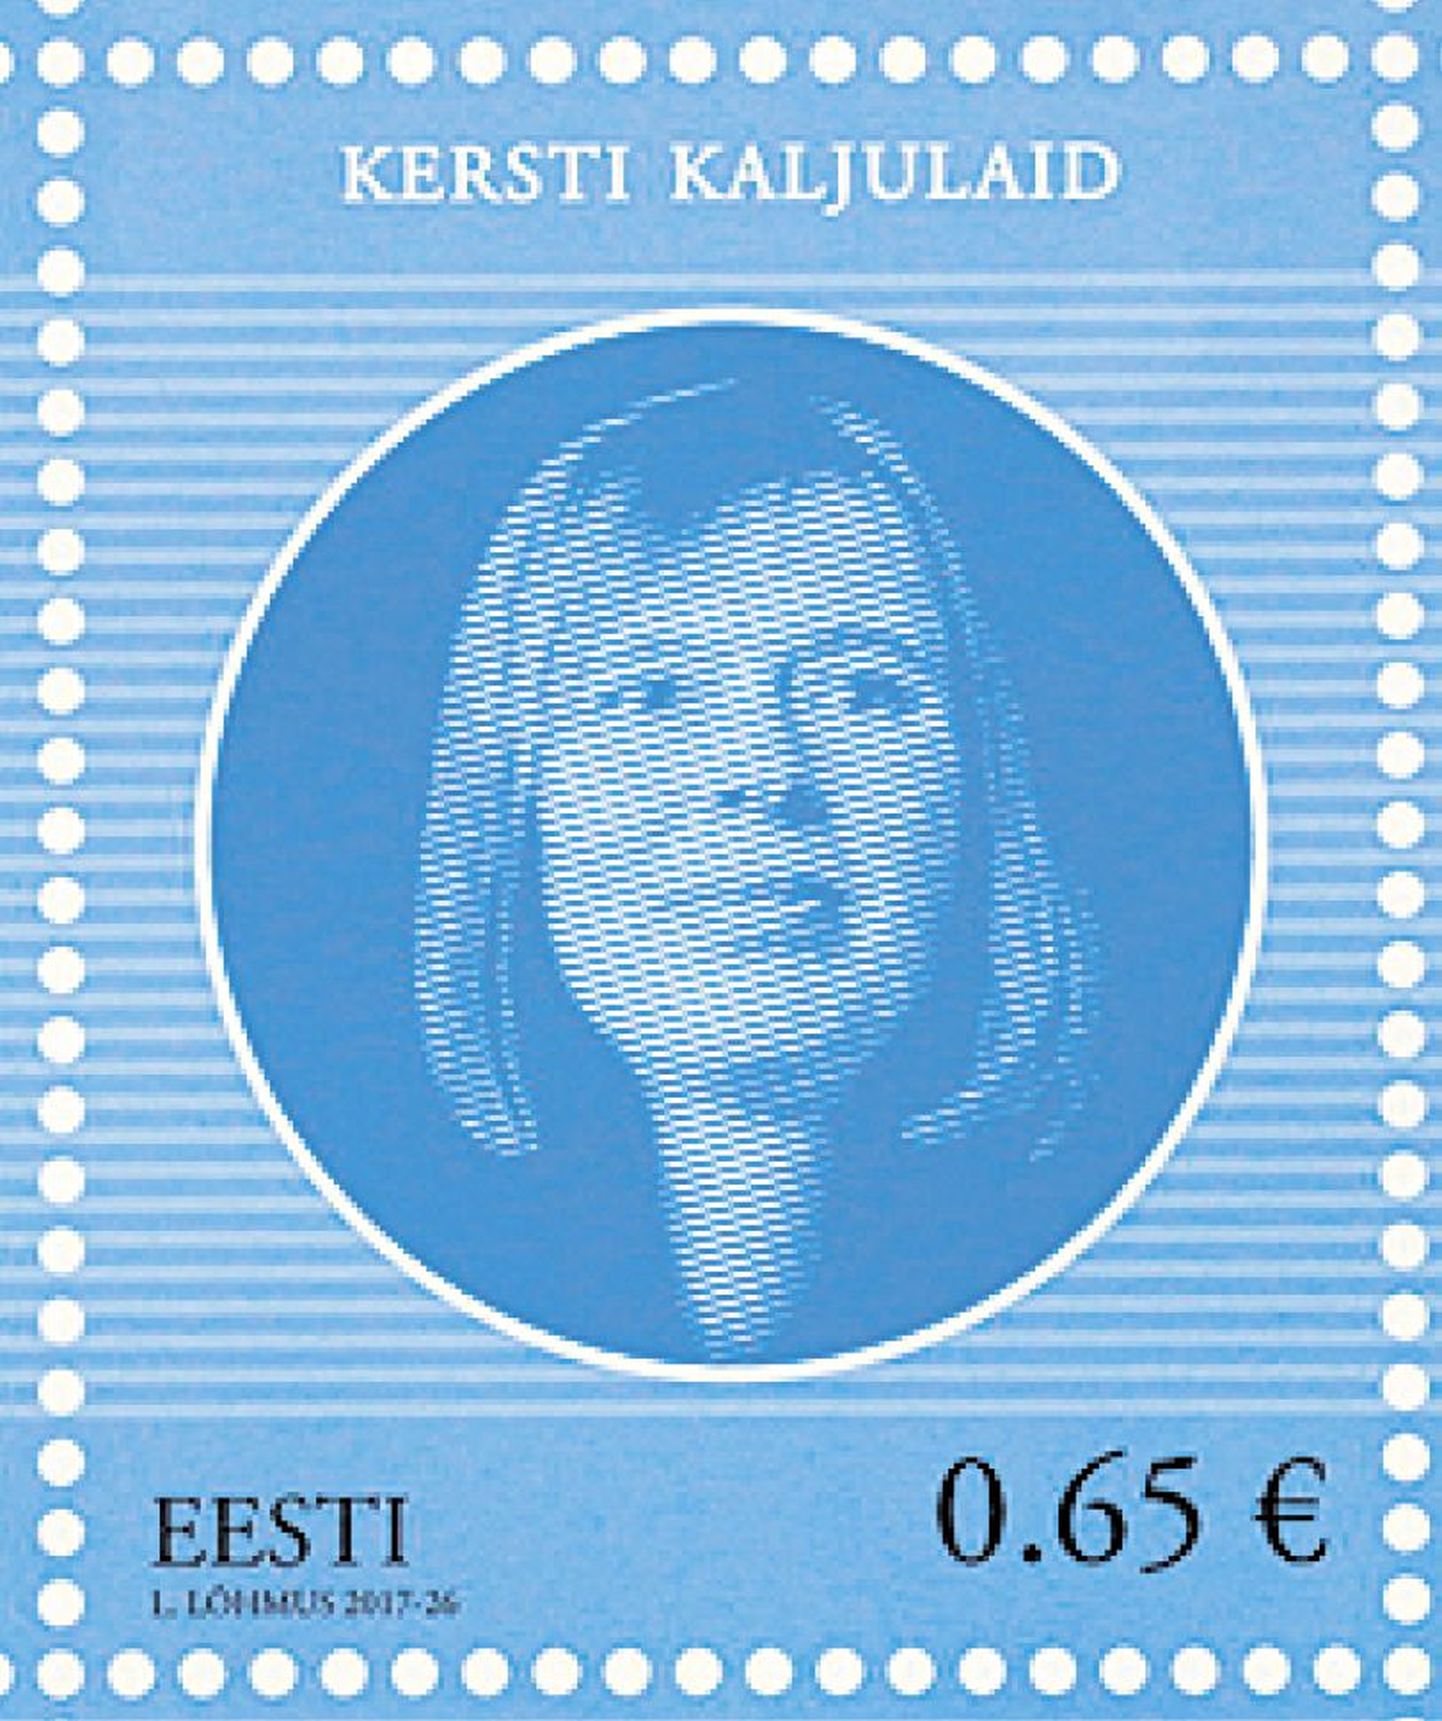 Kersti Kaljulaidi mark